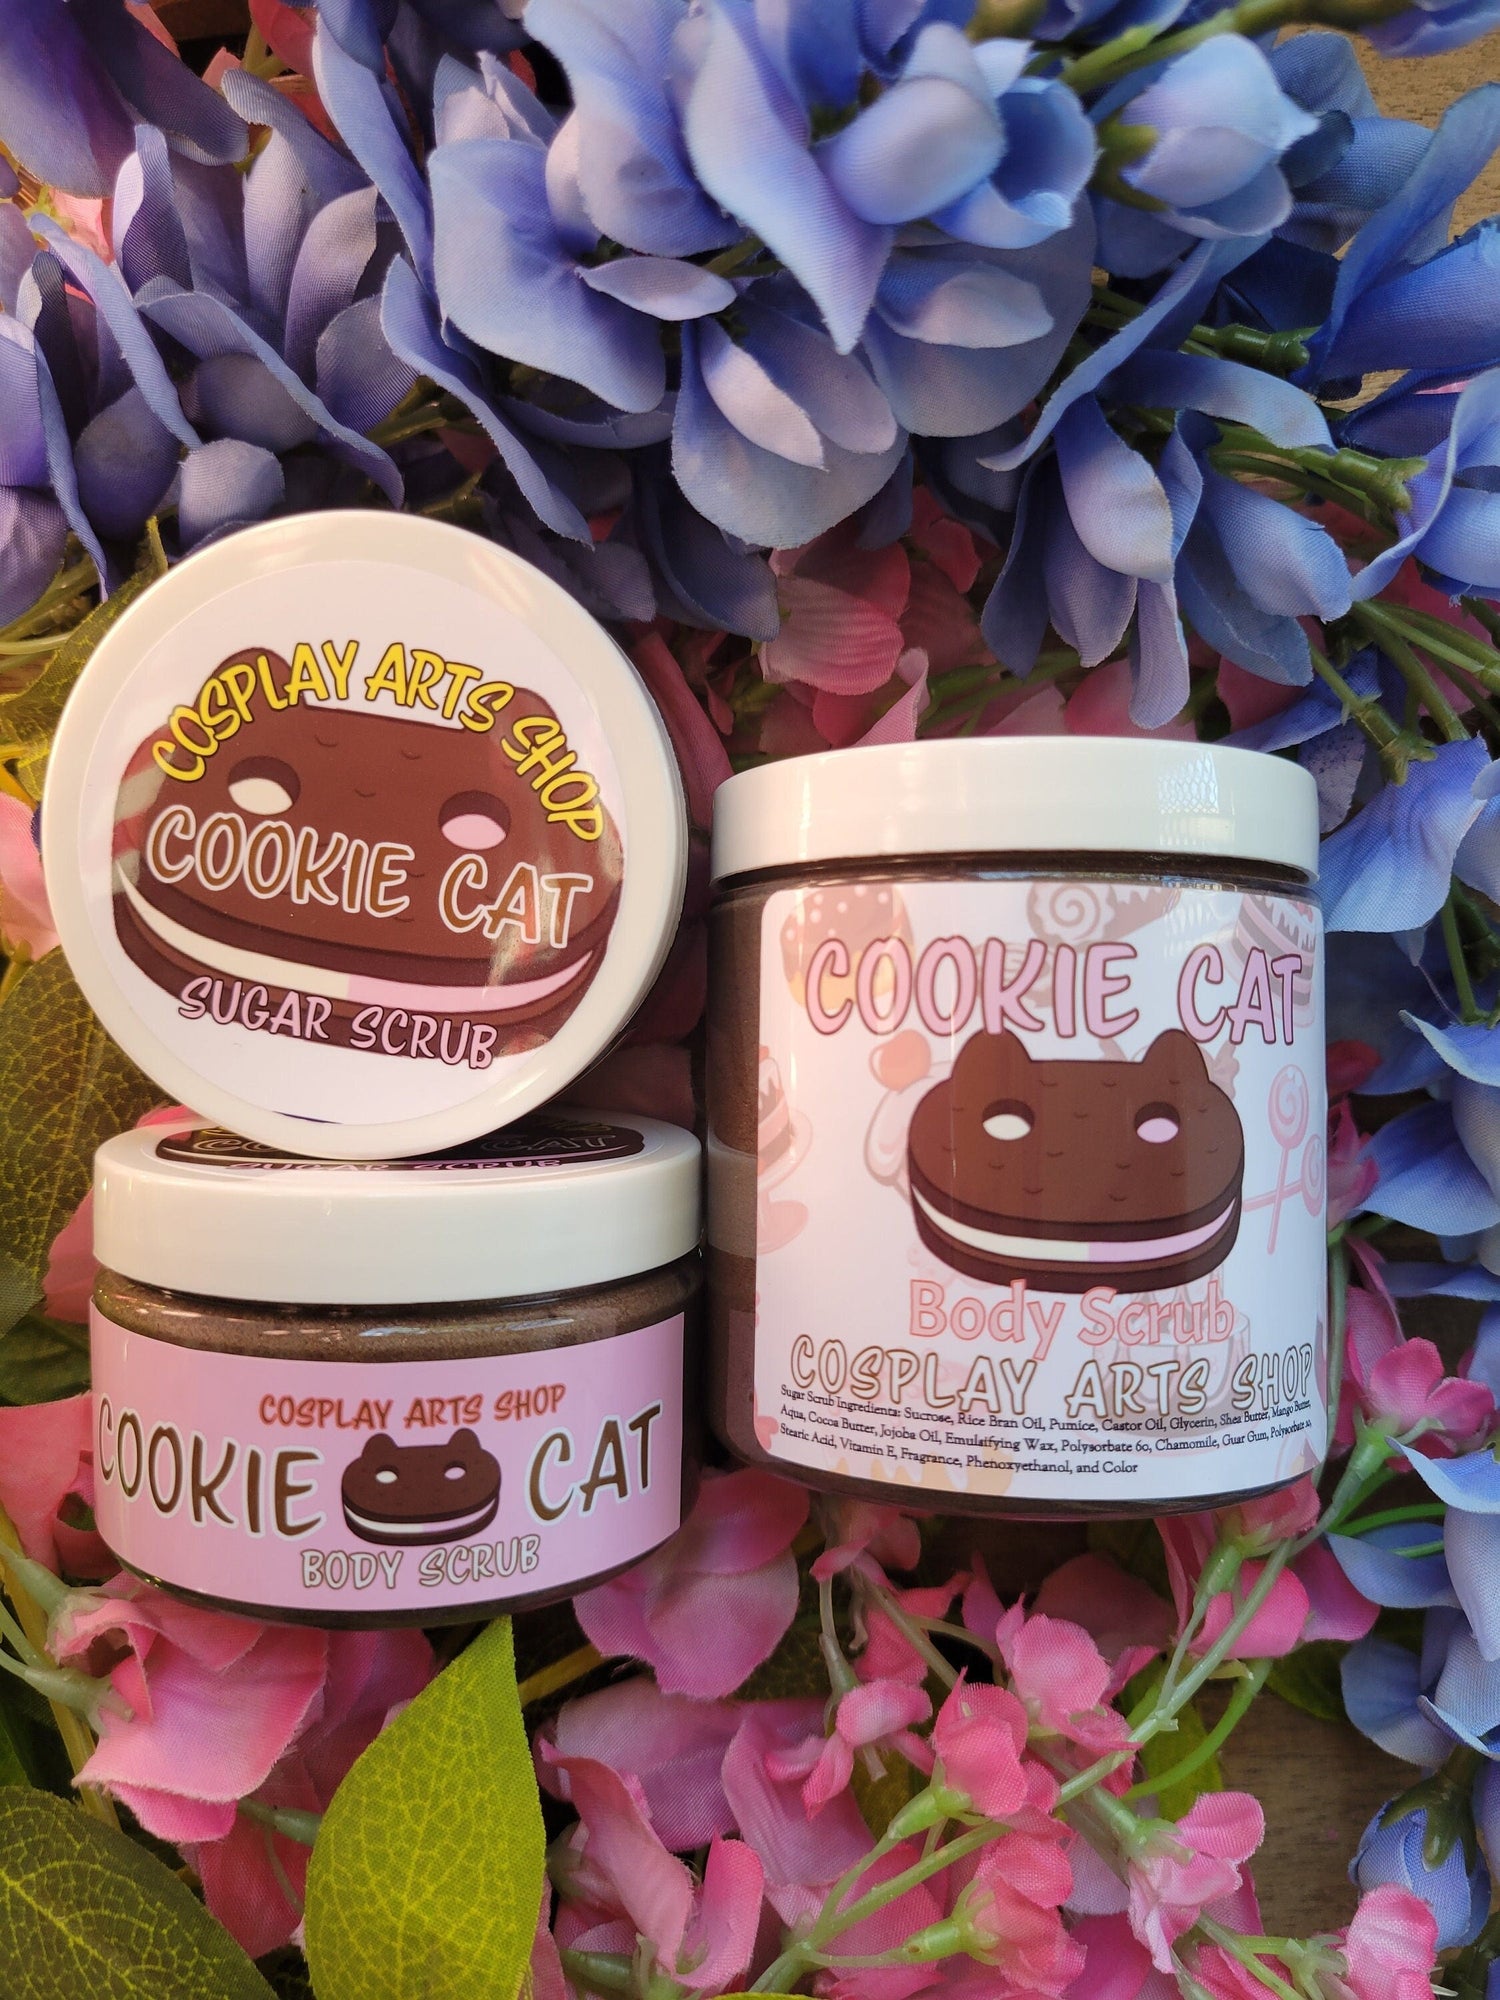 Cookie Cat Sugar Scrub - Cosplay Arts Shop